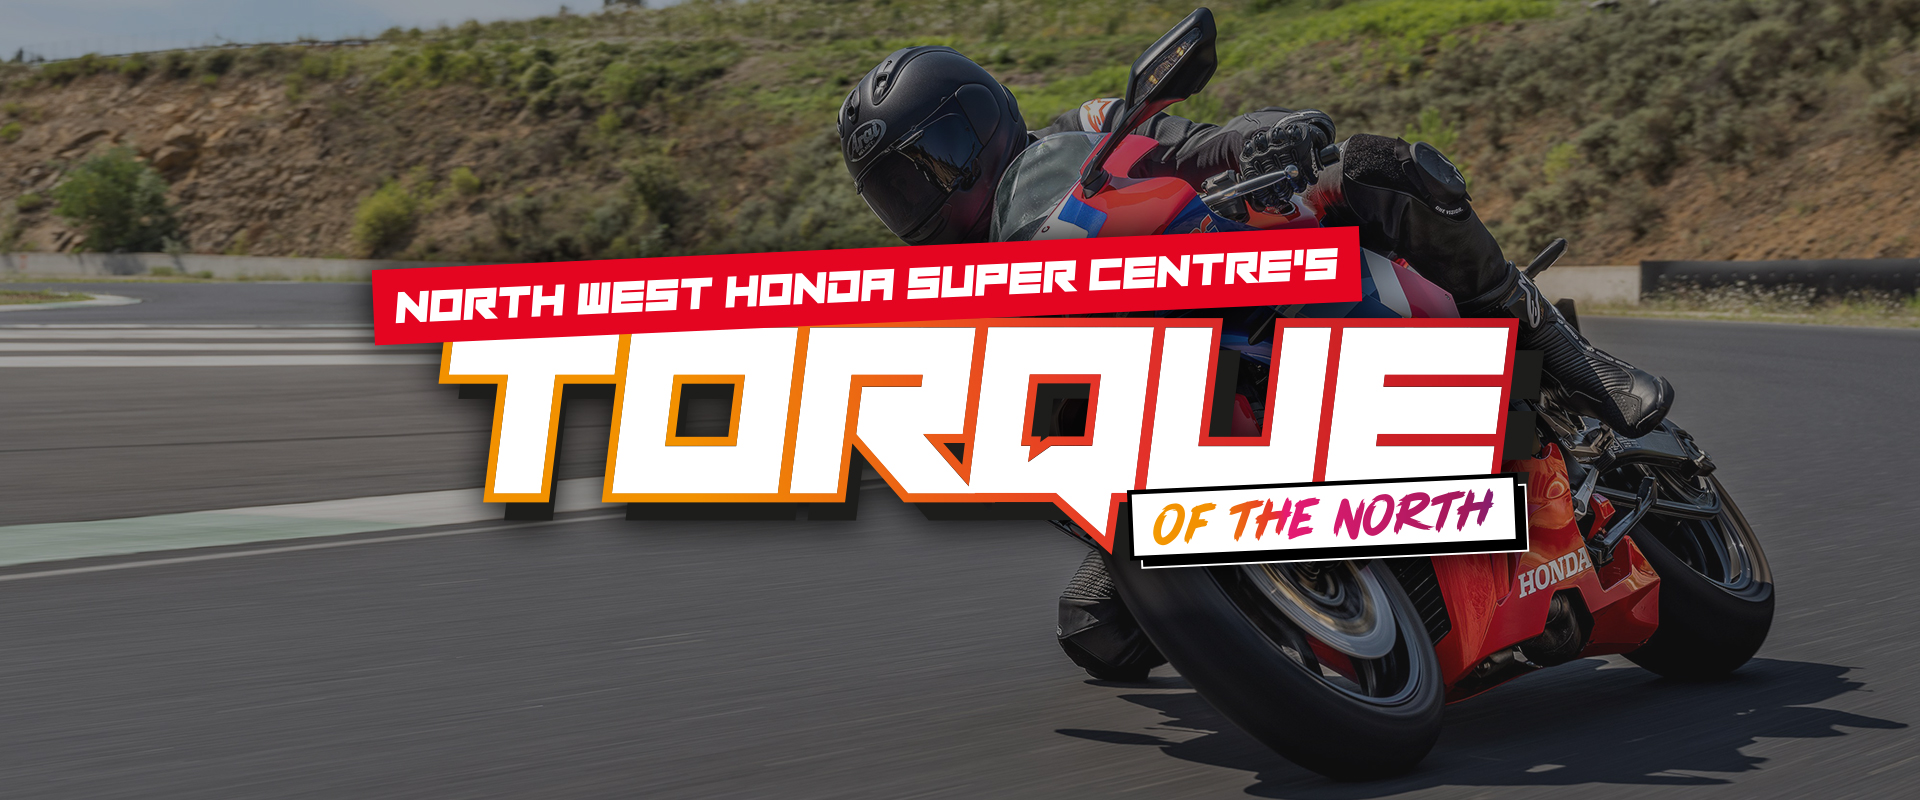 North West Honda Motorcycle News